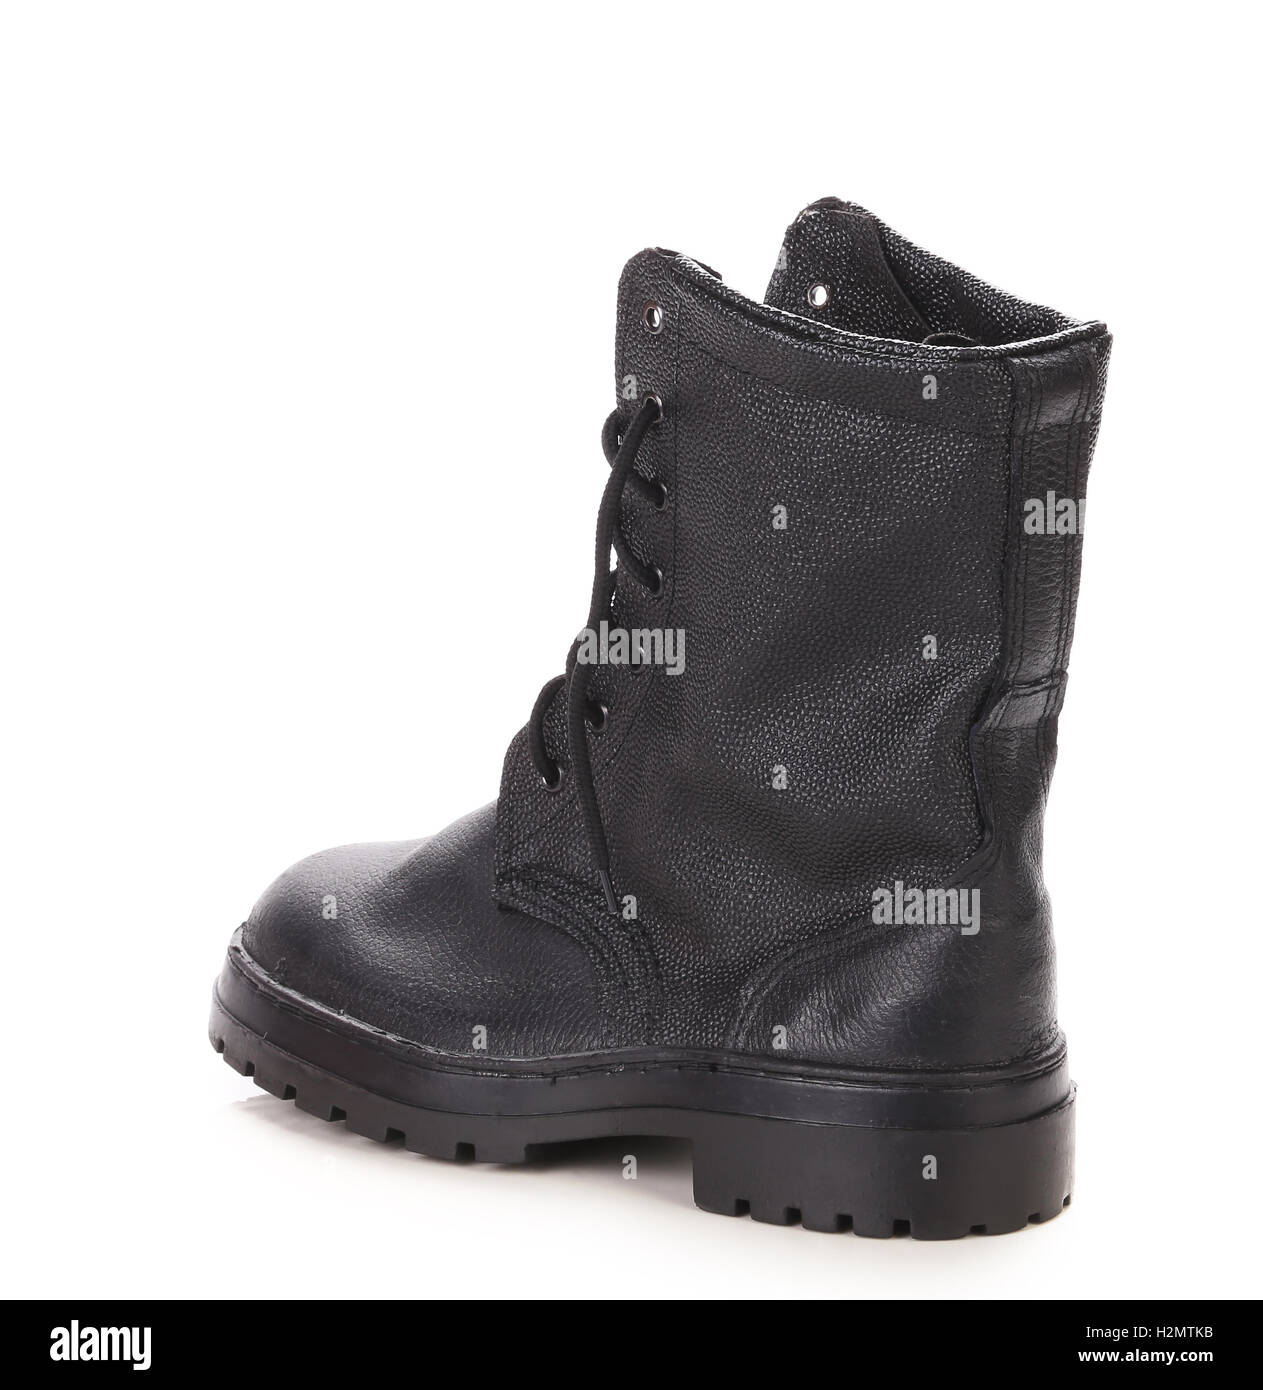 Black leather boot Stock Photo - Alamy